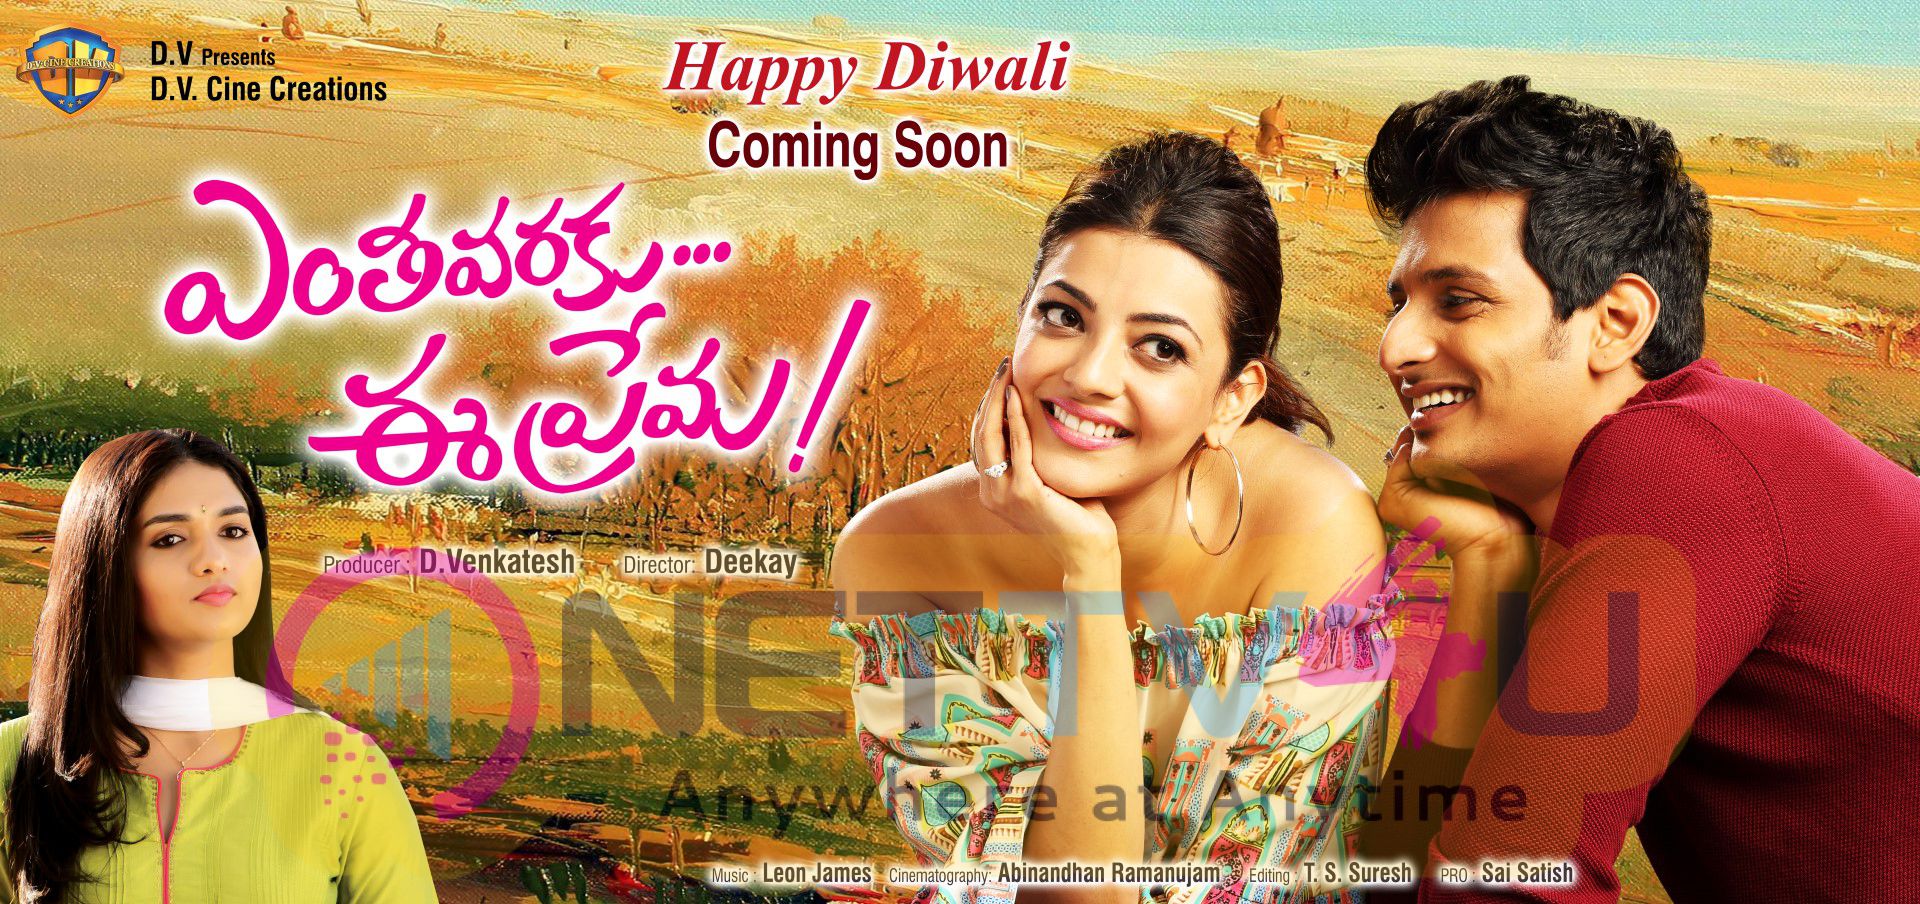 Telugu Movie Yenthavaraku Diwali Posters Telugu Gallery